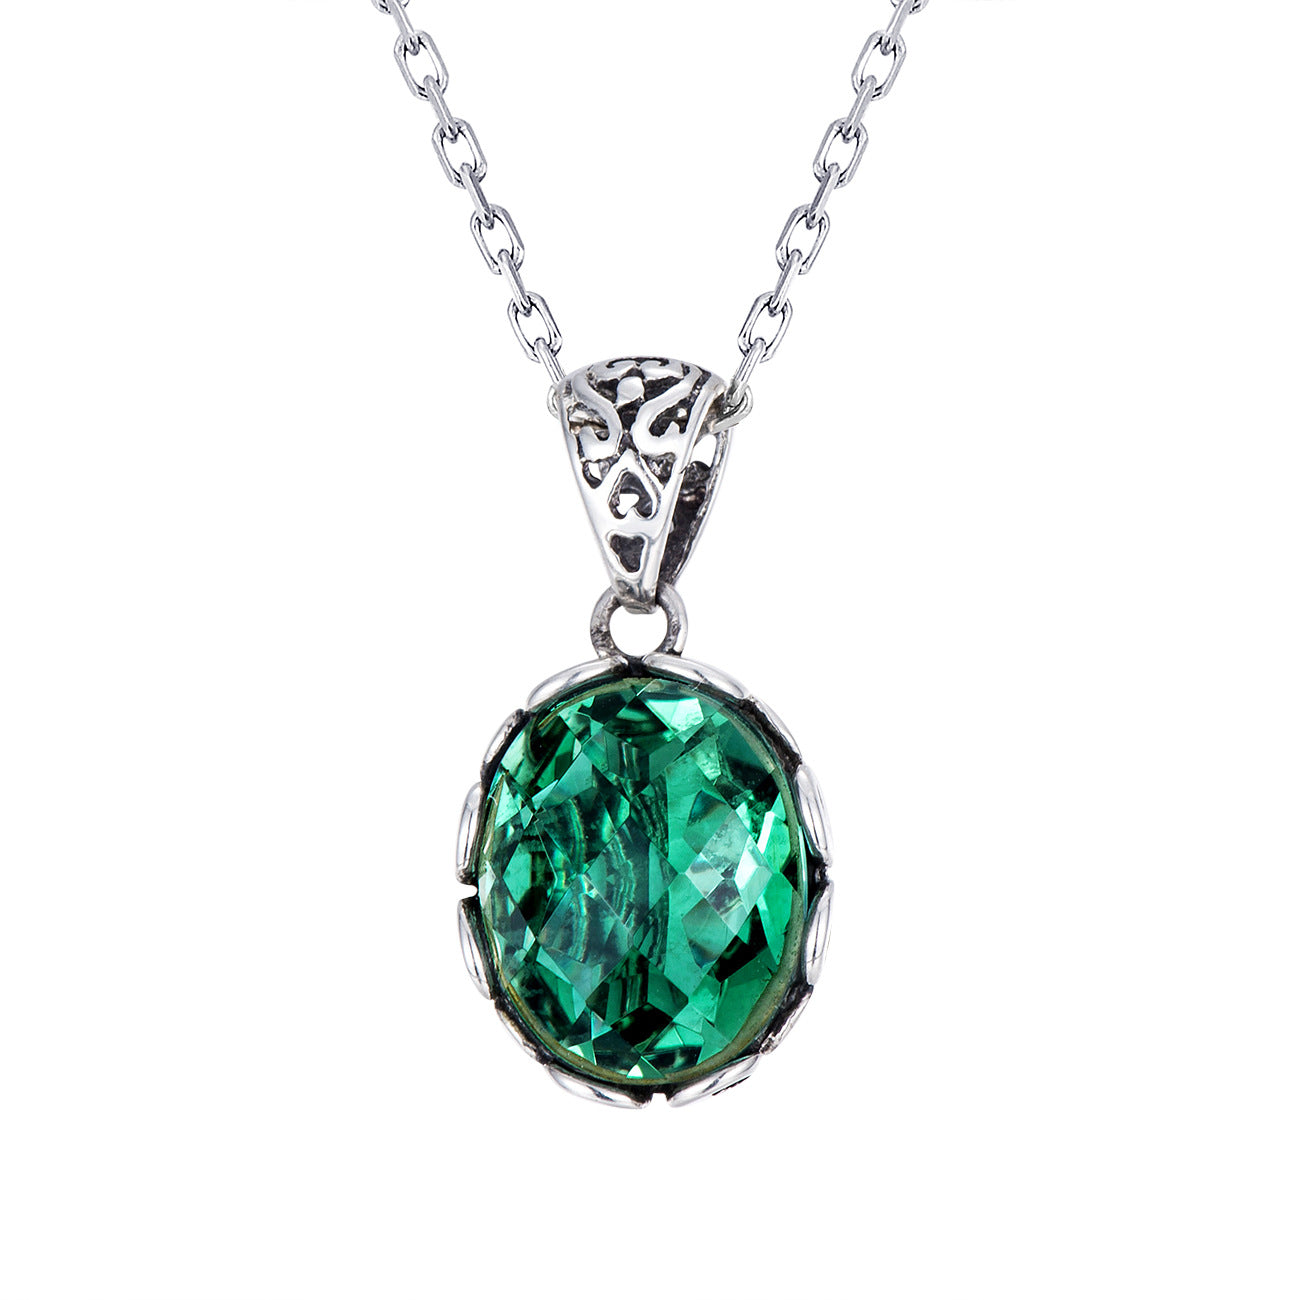 Vintage Green Crystal Necklace